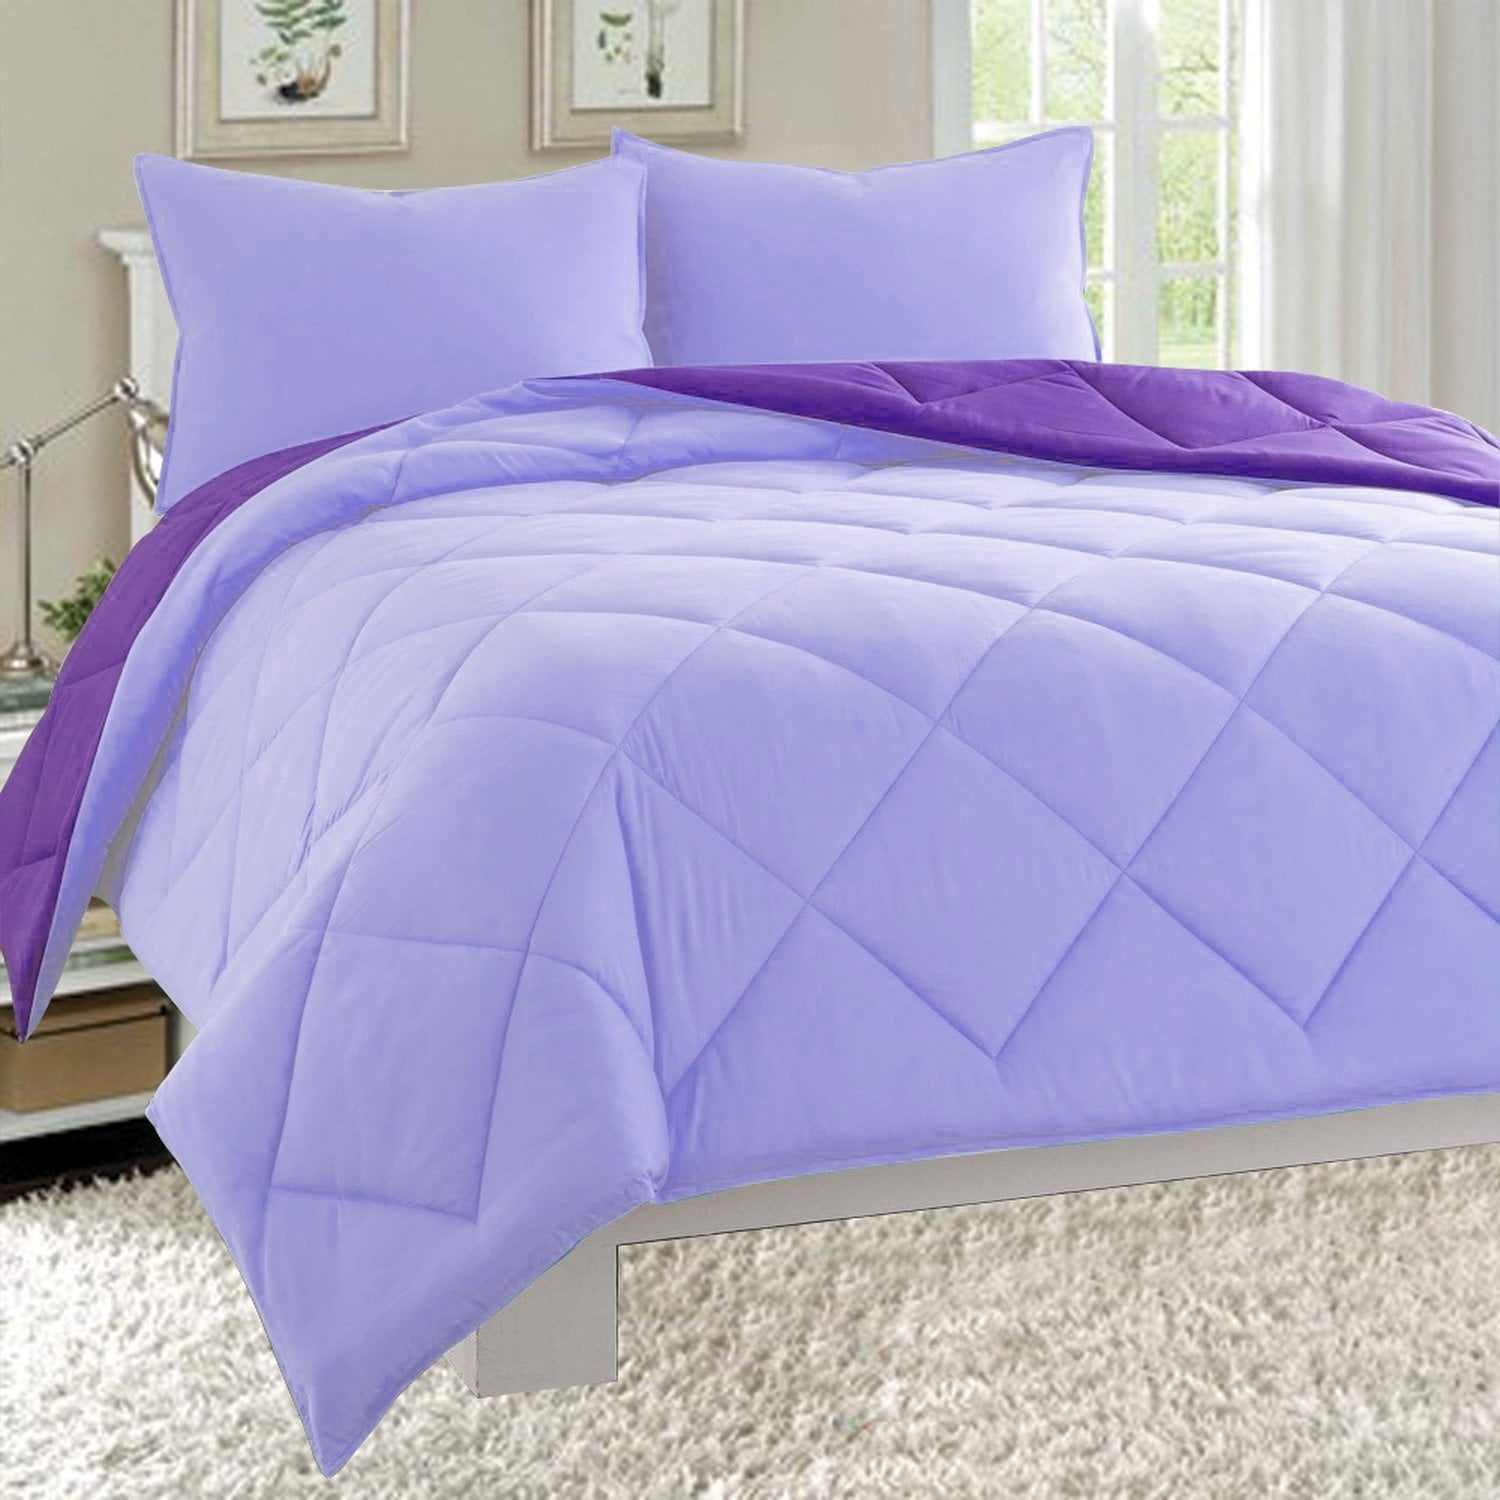 Liliac Purple Girls' Comforter Warm Reversible Diamond Duvet Inserts Queen Twin 